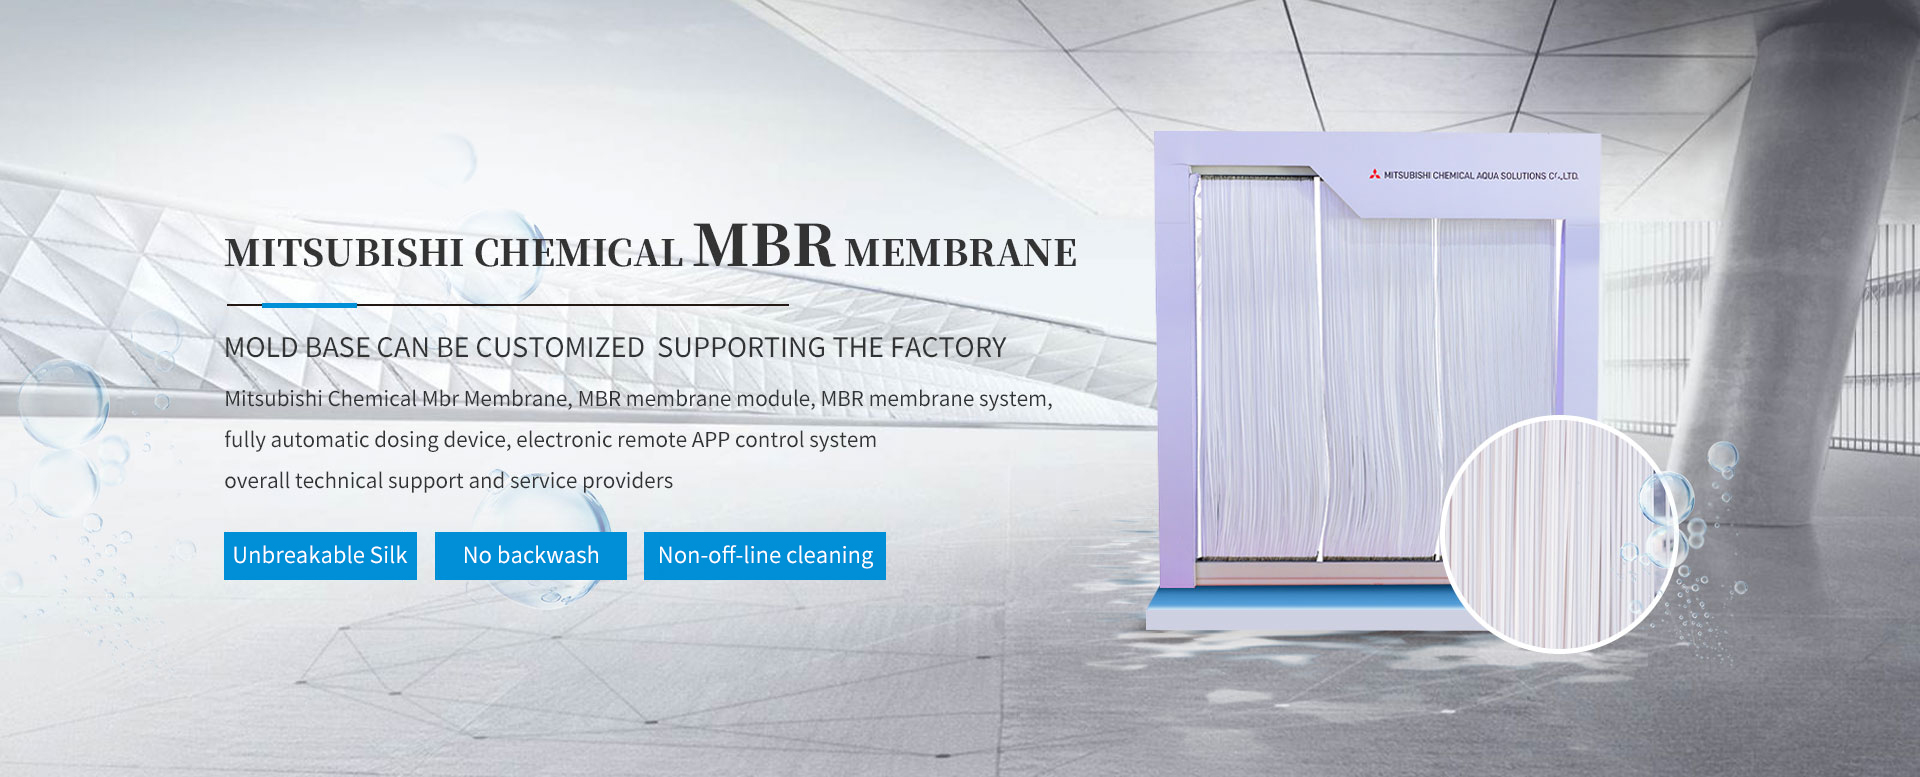 Mitsubishi Chemical MBR membrane